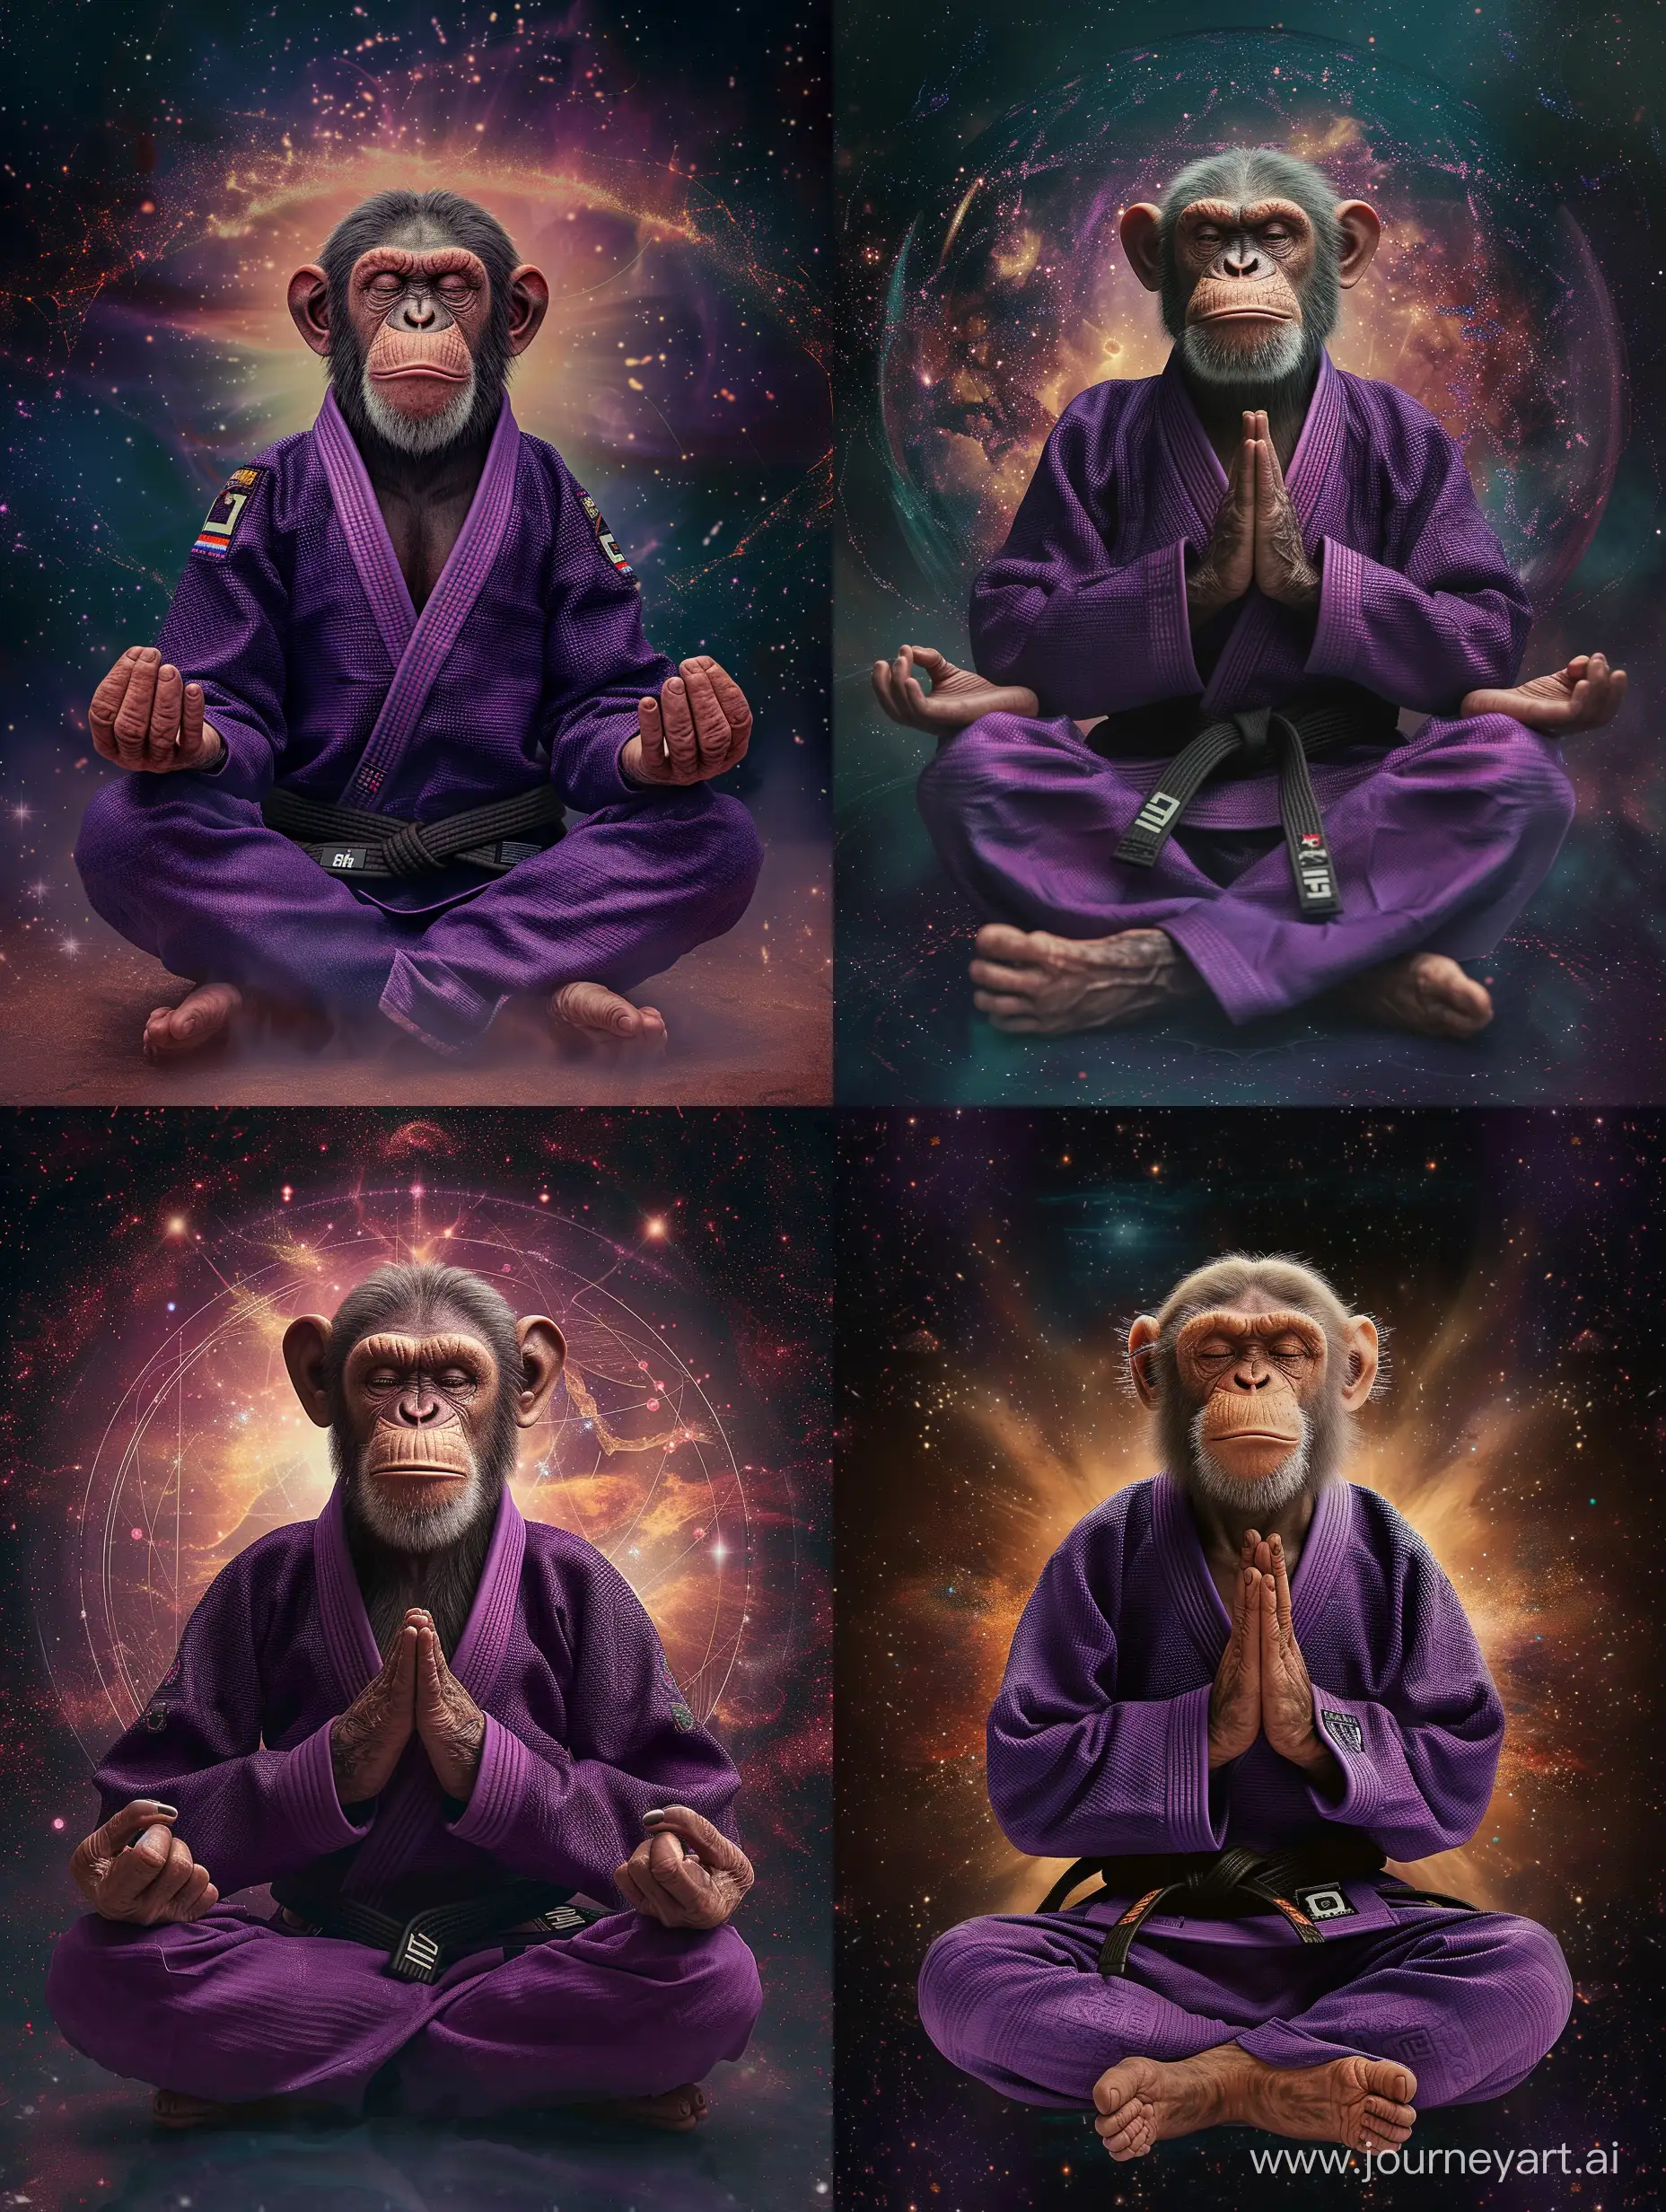 Meditating-Monkey-in-Purple-Brazilian-Jiu-Jitsu-Gi-with-Cosmic-Symmetry